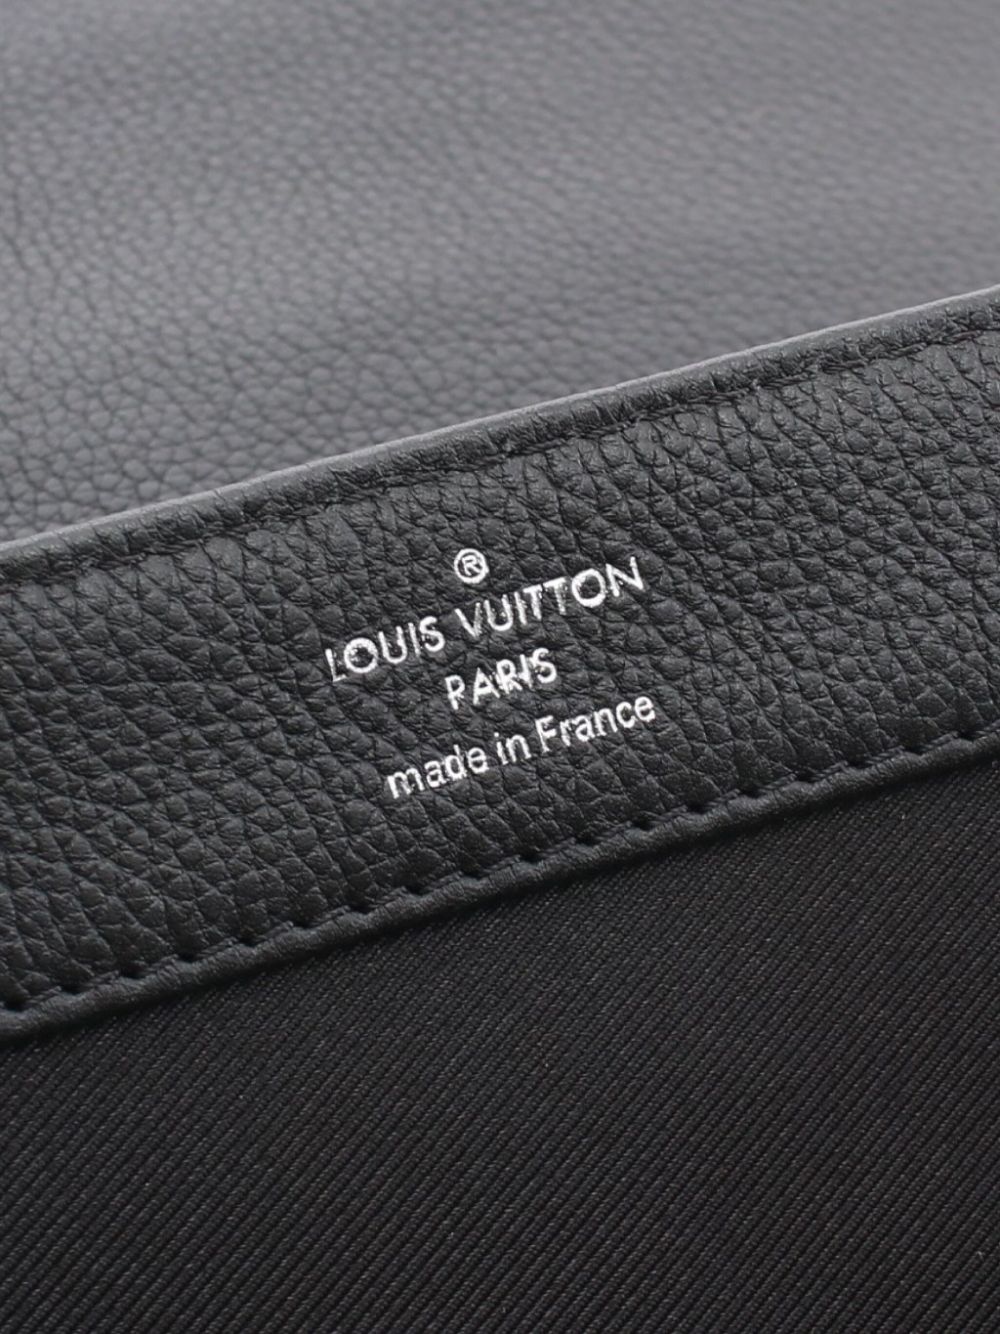 Louis Vuitton 2019 pre-owned My Lockme BB Shoulder Bag - Farfetch